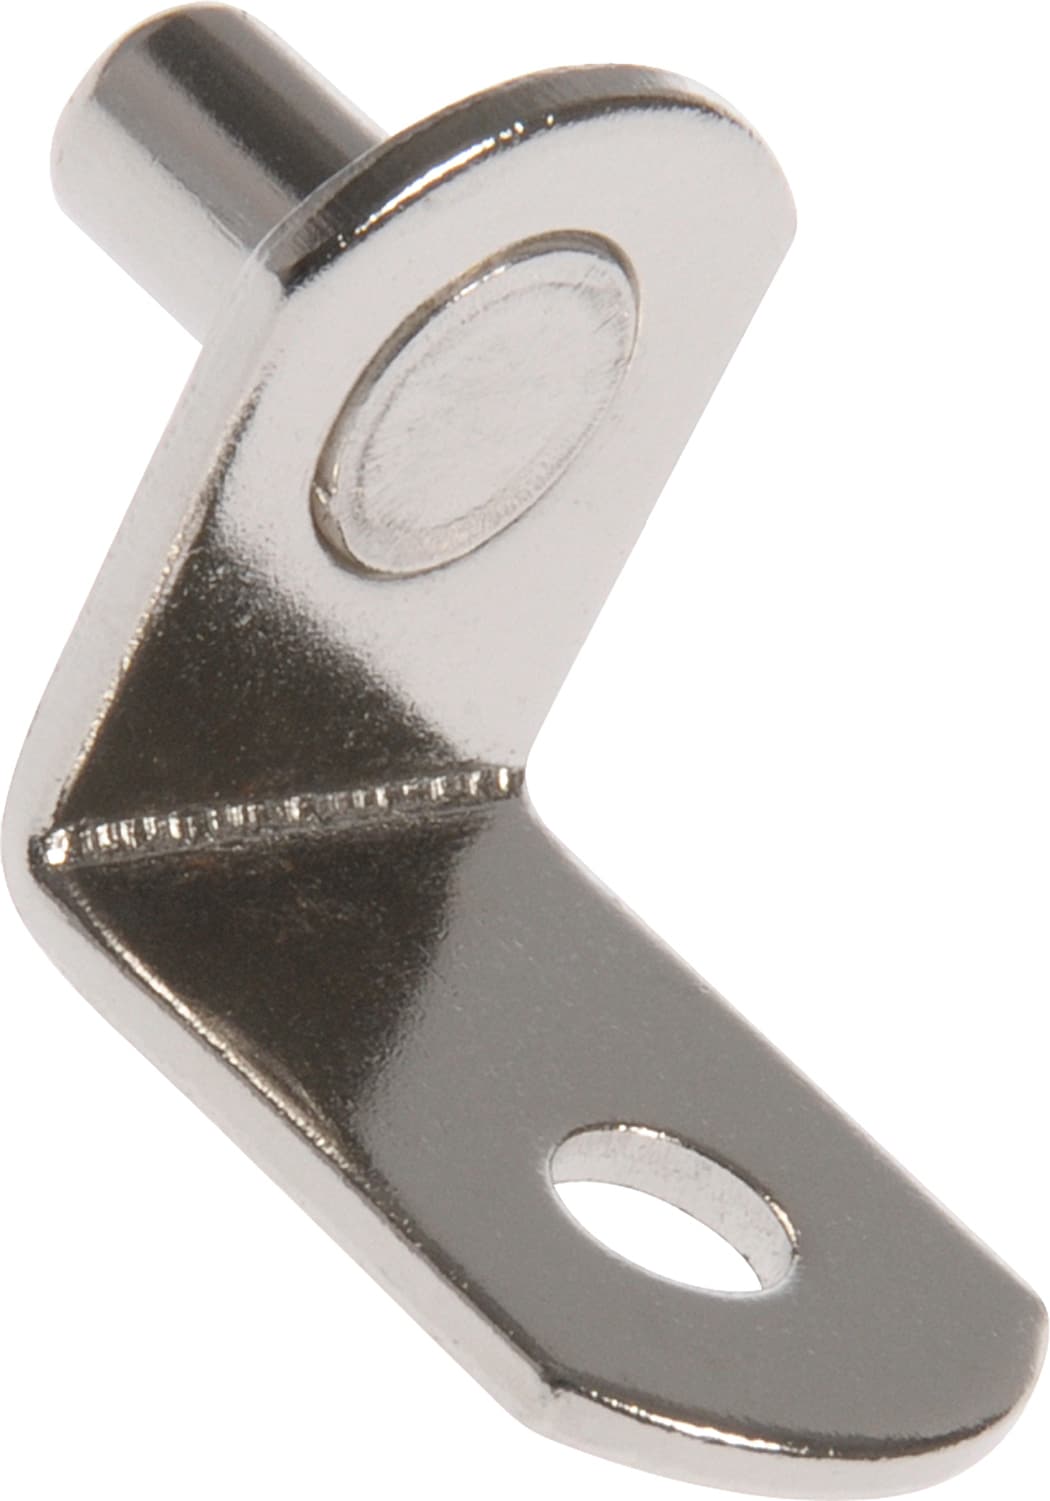 Shelf pins Shelving Brackets & Hardware at